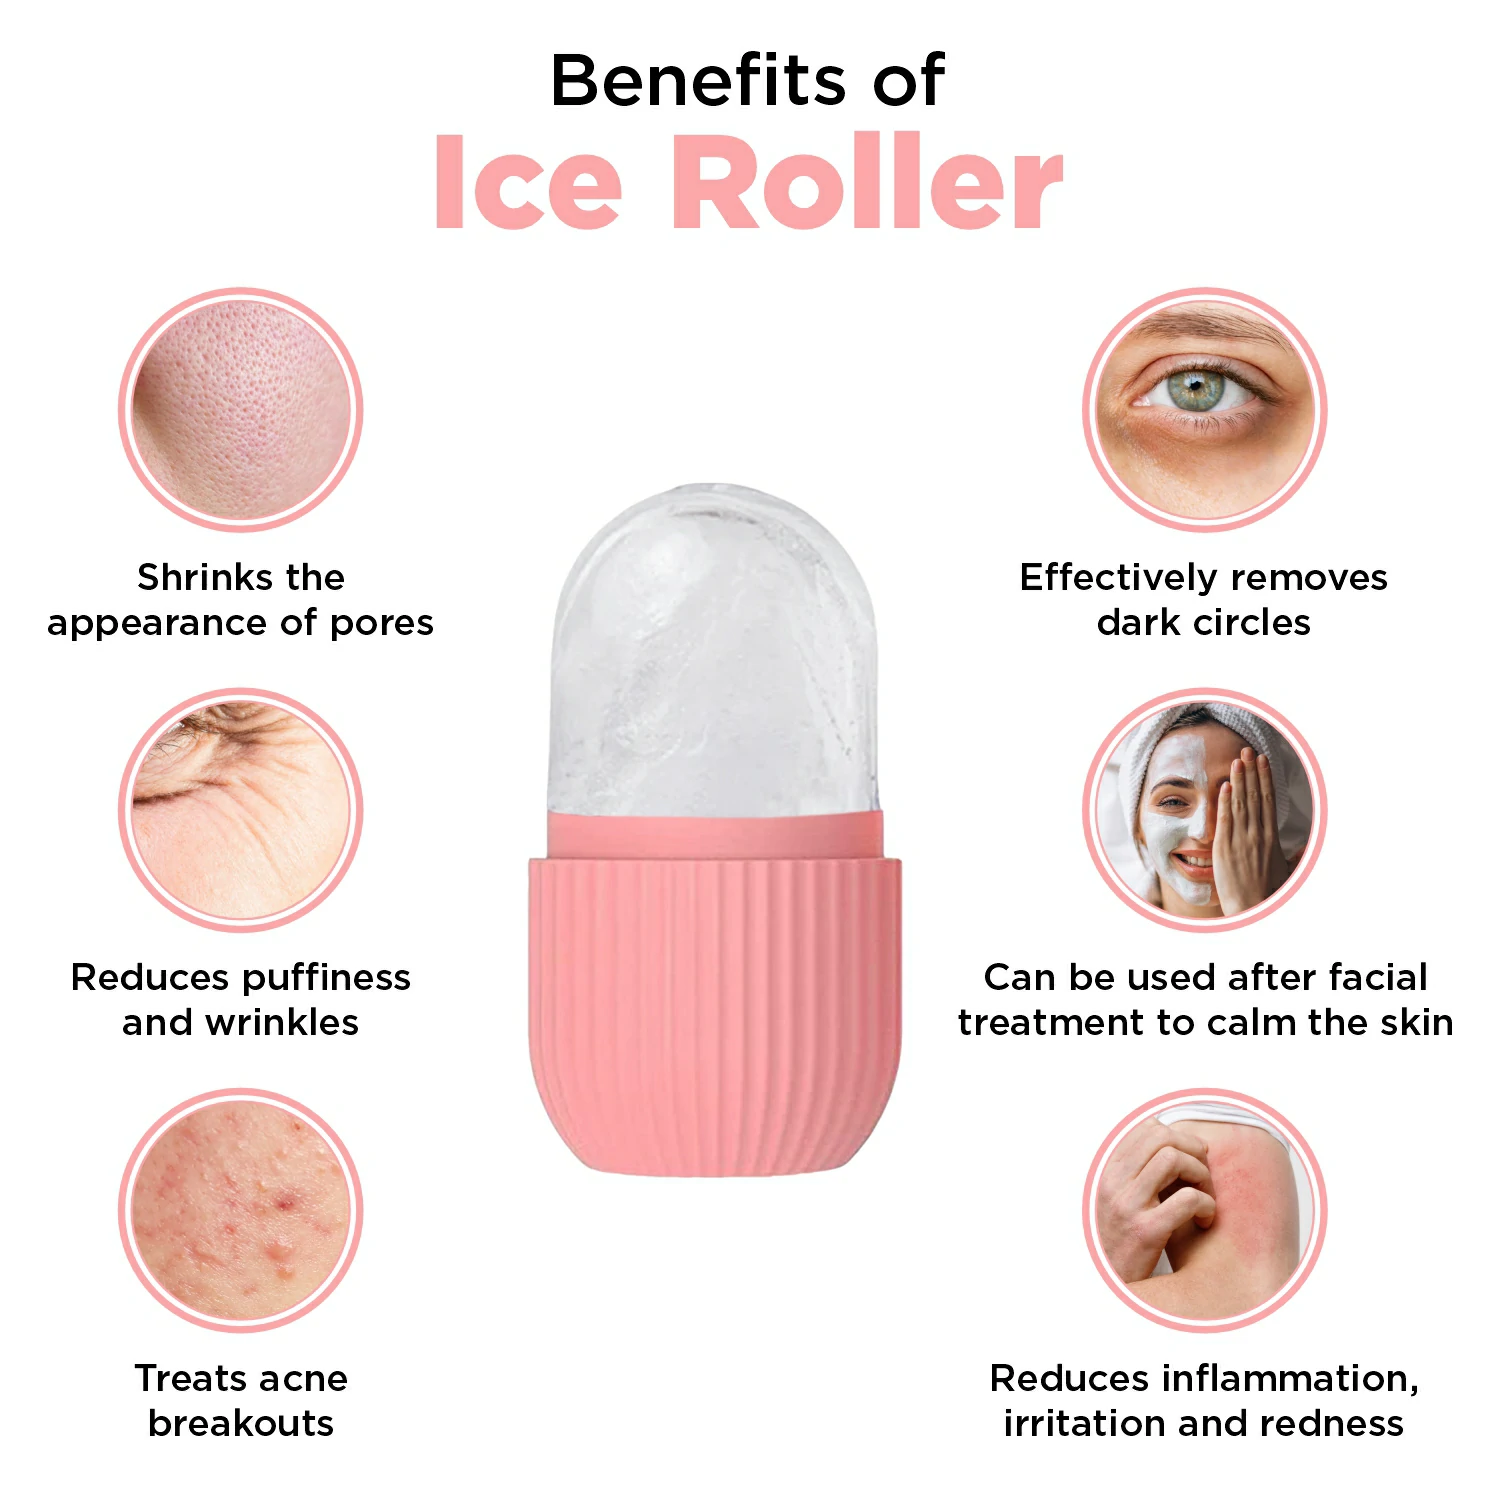 Benefits of Ice Roller